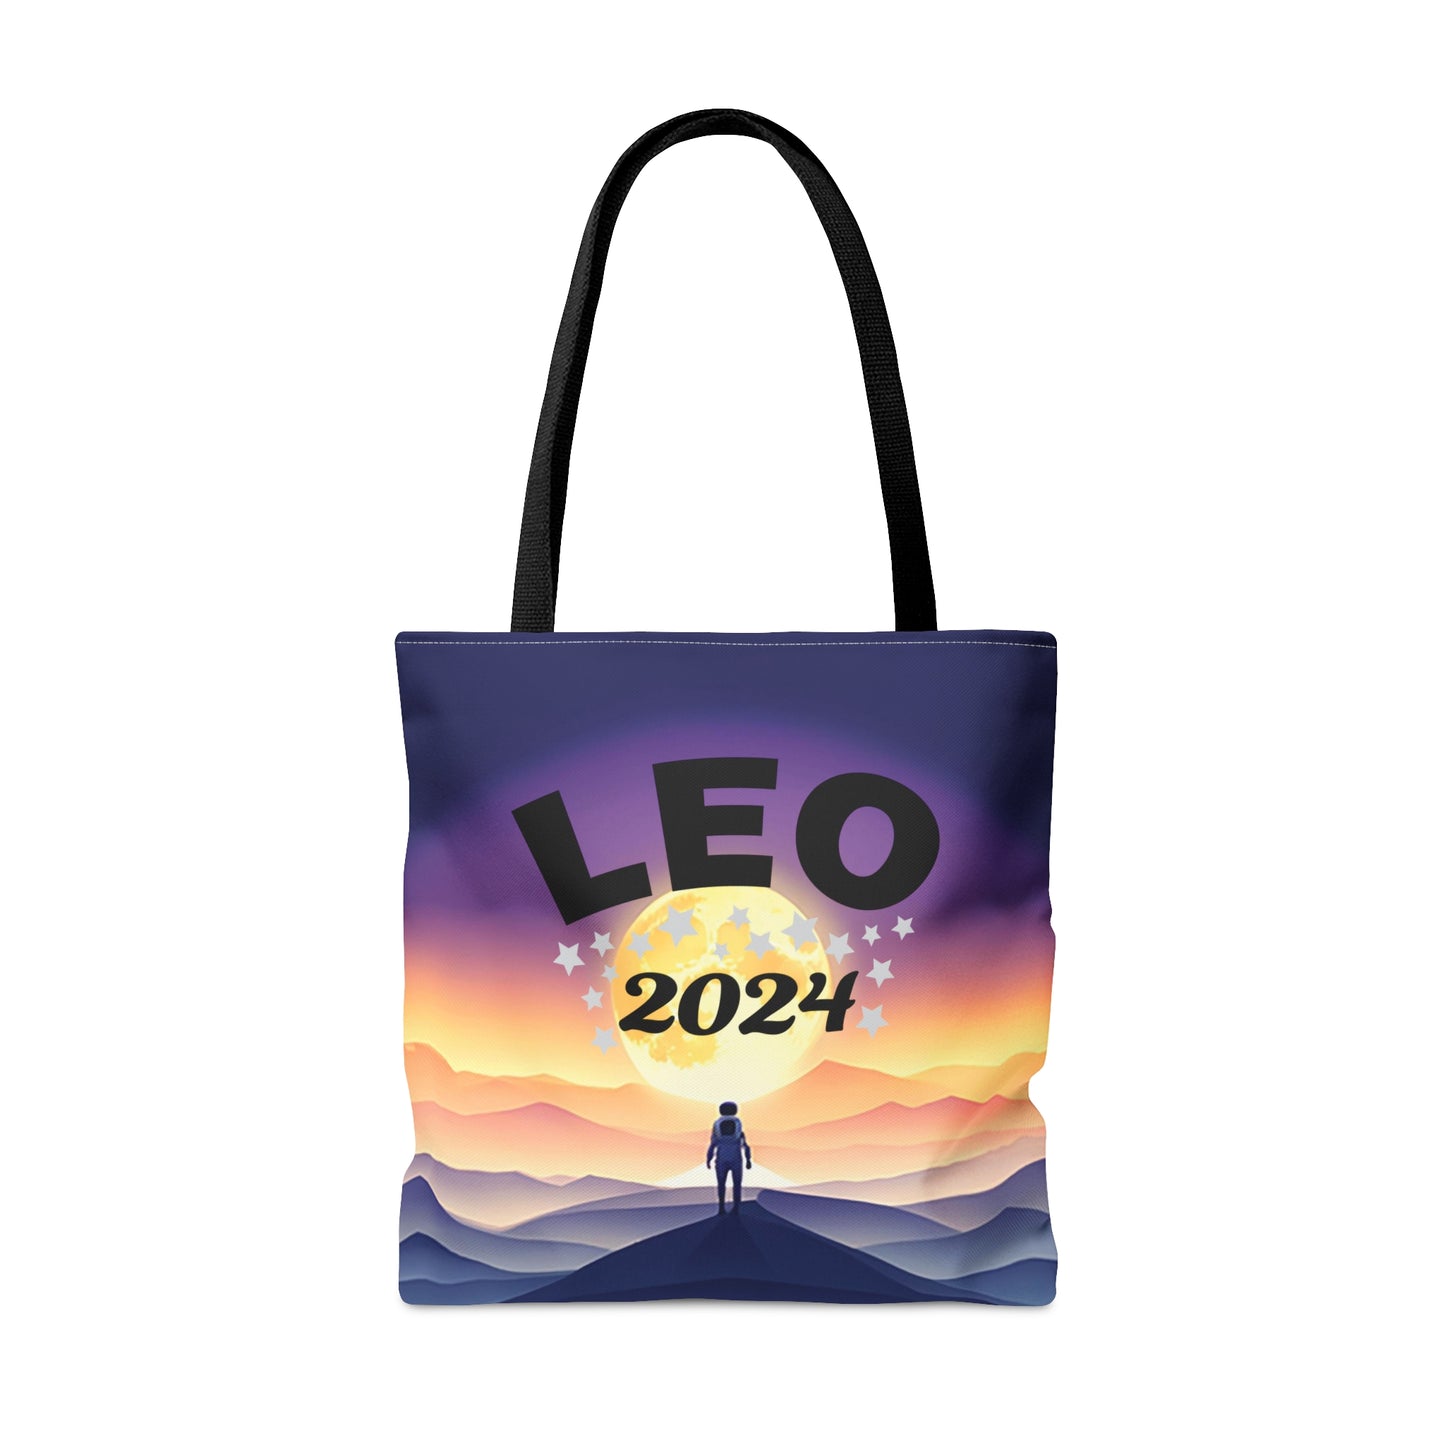 Leo 2024 Tote Bag